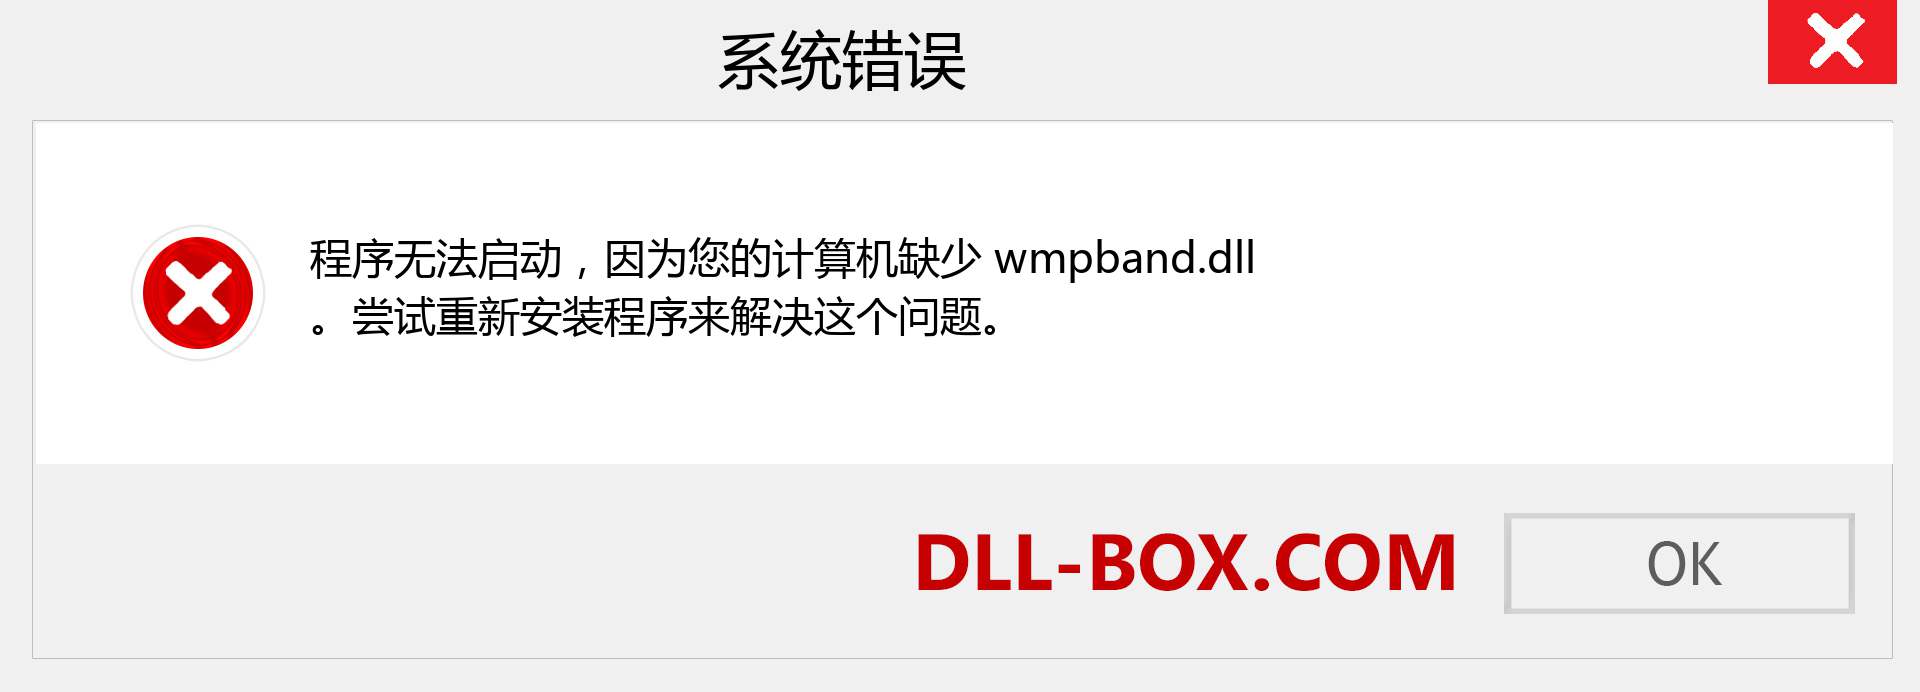 wmpband.dll 文件丢失？。 适用于 Windows 7、8、10 的下载 - 修复 Windows、照片、图像上的 wmpband dll 丢失错误